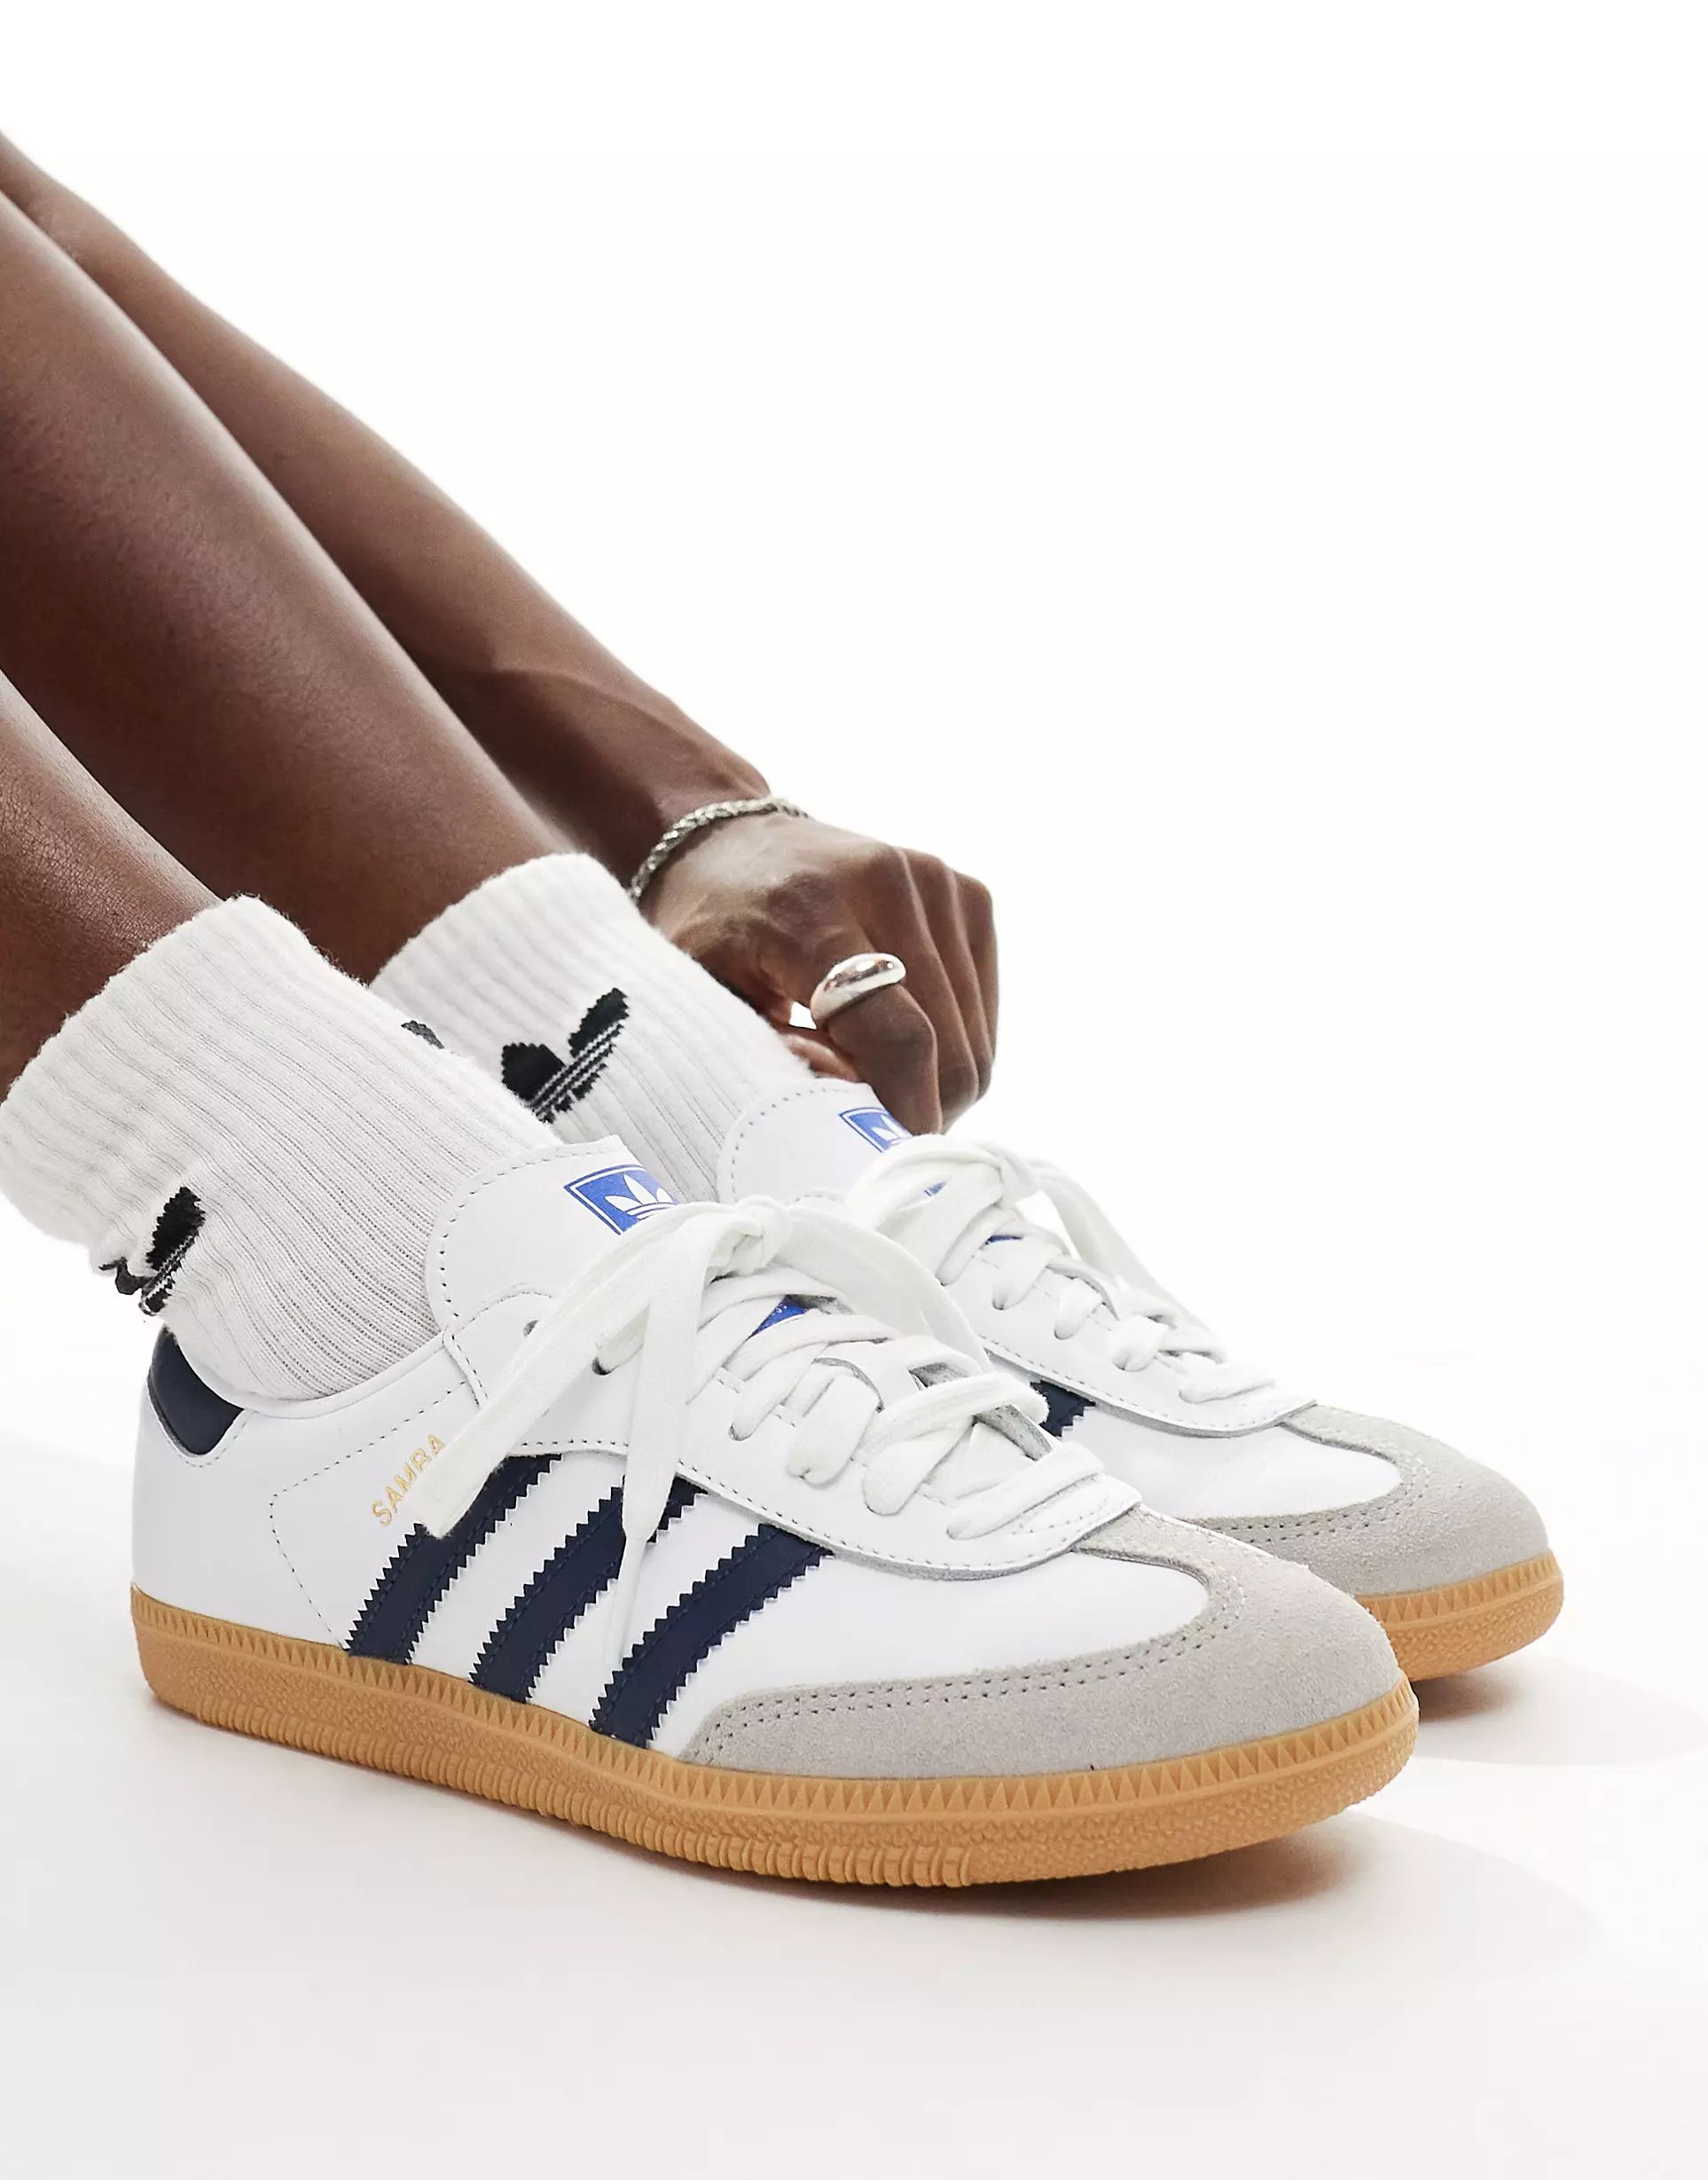 adidas Originals Samba OG trainers in white and indigo | ASOS (Global)